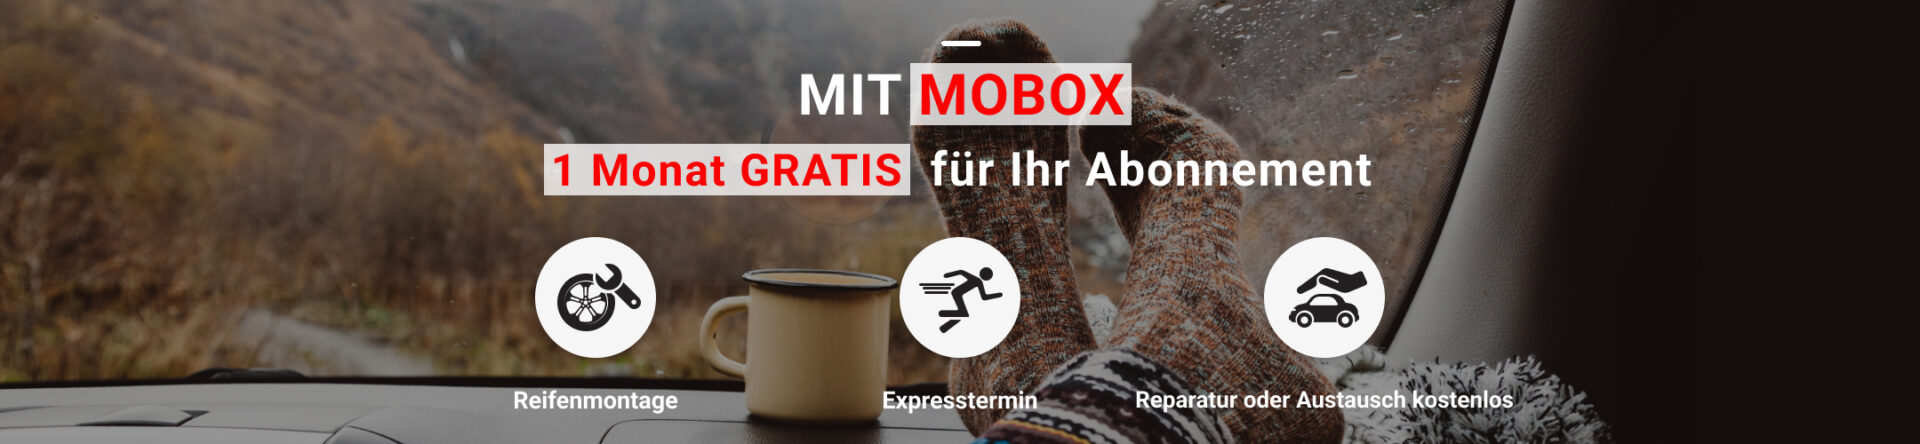 Mit MOBOX, 1 Monat Gratis- Netto Reifen Discount